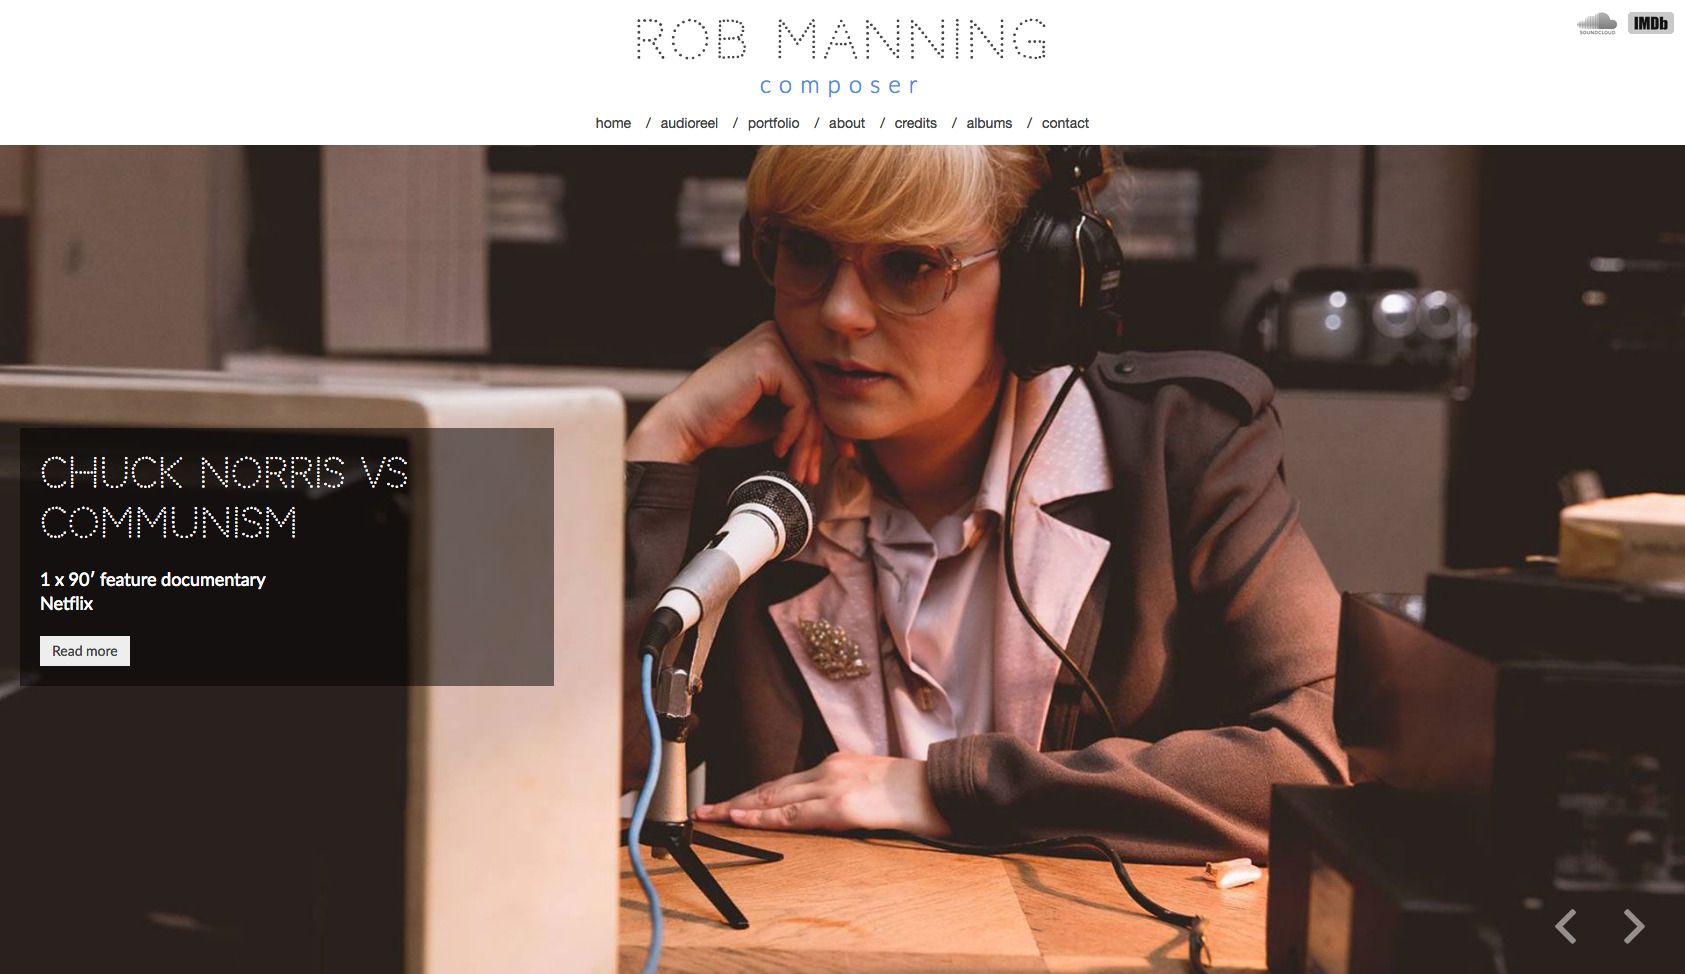 Rob Manning website screengrab